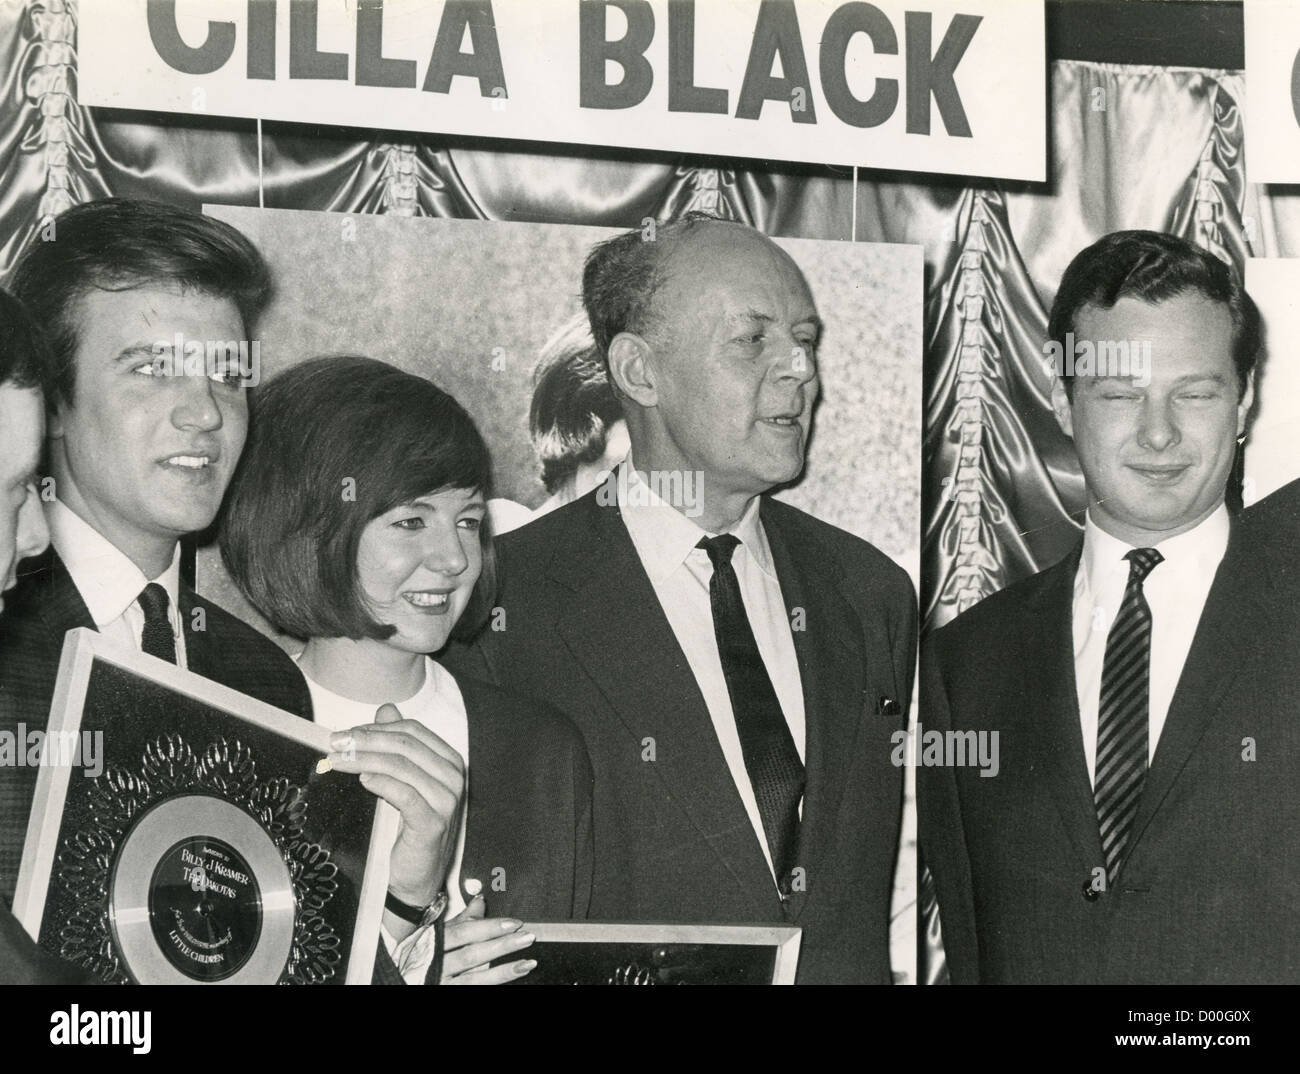 CILLA BLACK in 1964 at EMI House, with from l: Billy J. Kramer, EMI Chairman Sir Joseph Lockwood,Brian Epstein. Photo Tony Gale Stock Photo